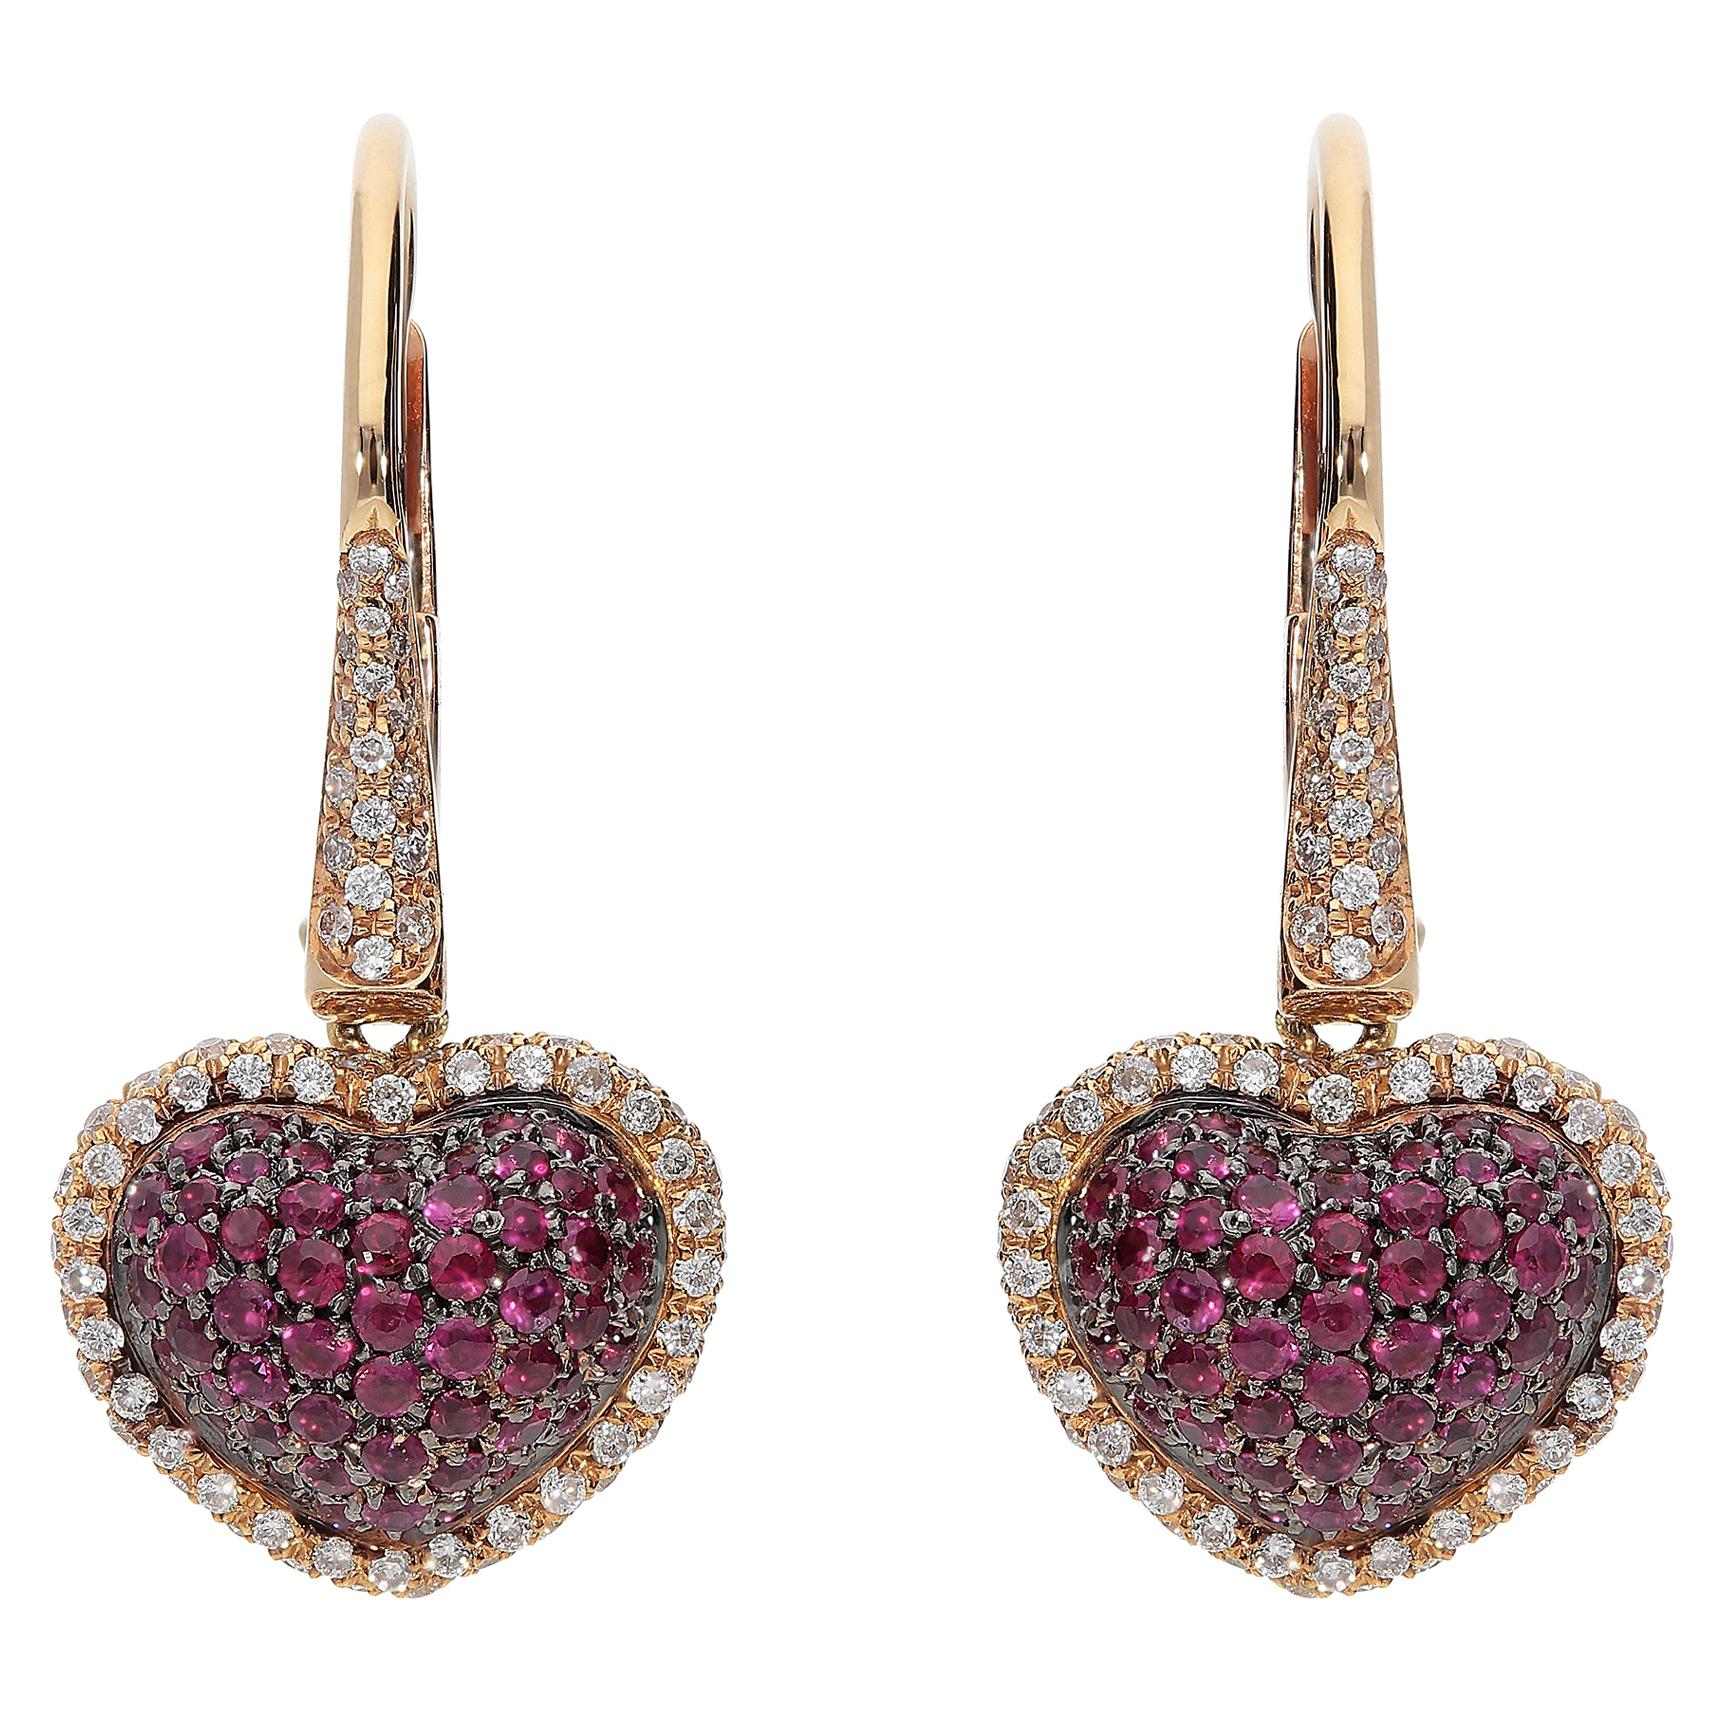 0.61 Rubies 0.41 White Gvs Diamonds 18 Karat Pink Gold Hearts Dangles Earrings For Sale